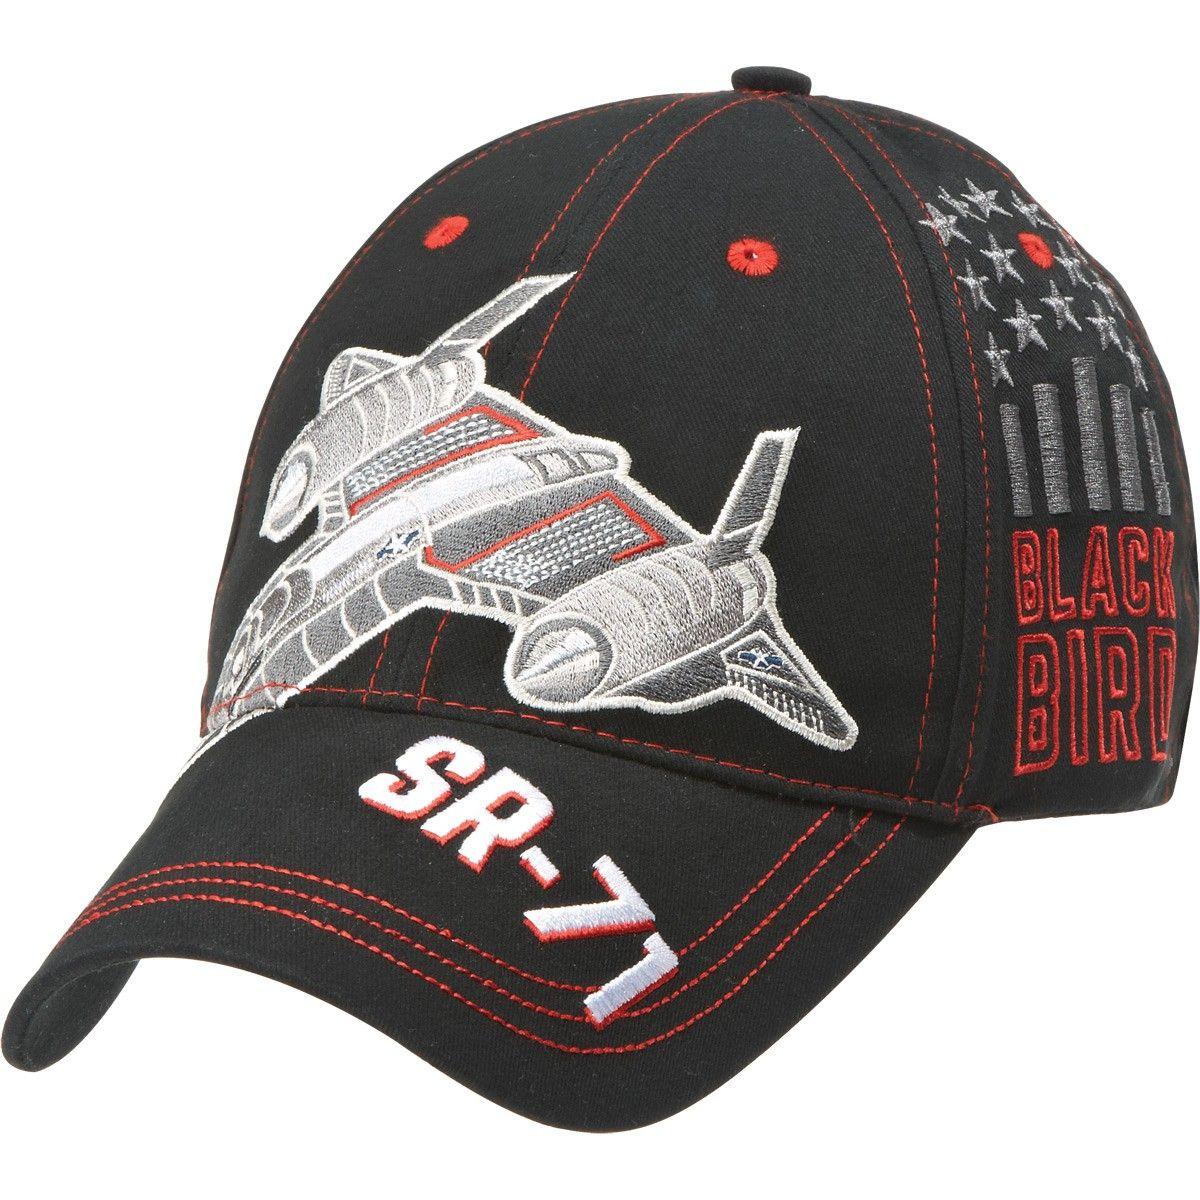 SR-71 Logo - SR 71 Blackbird Cap